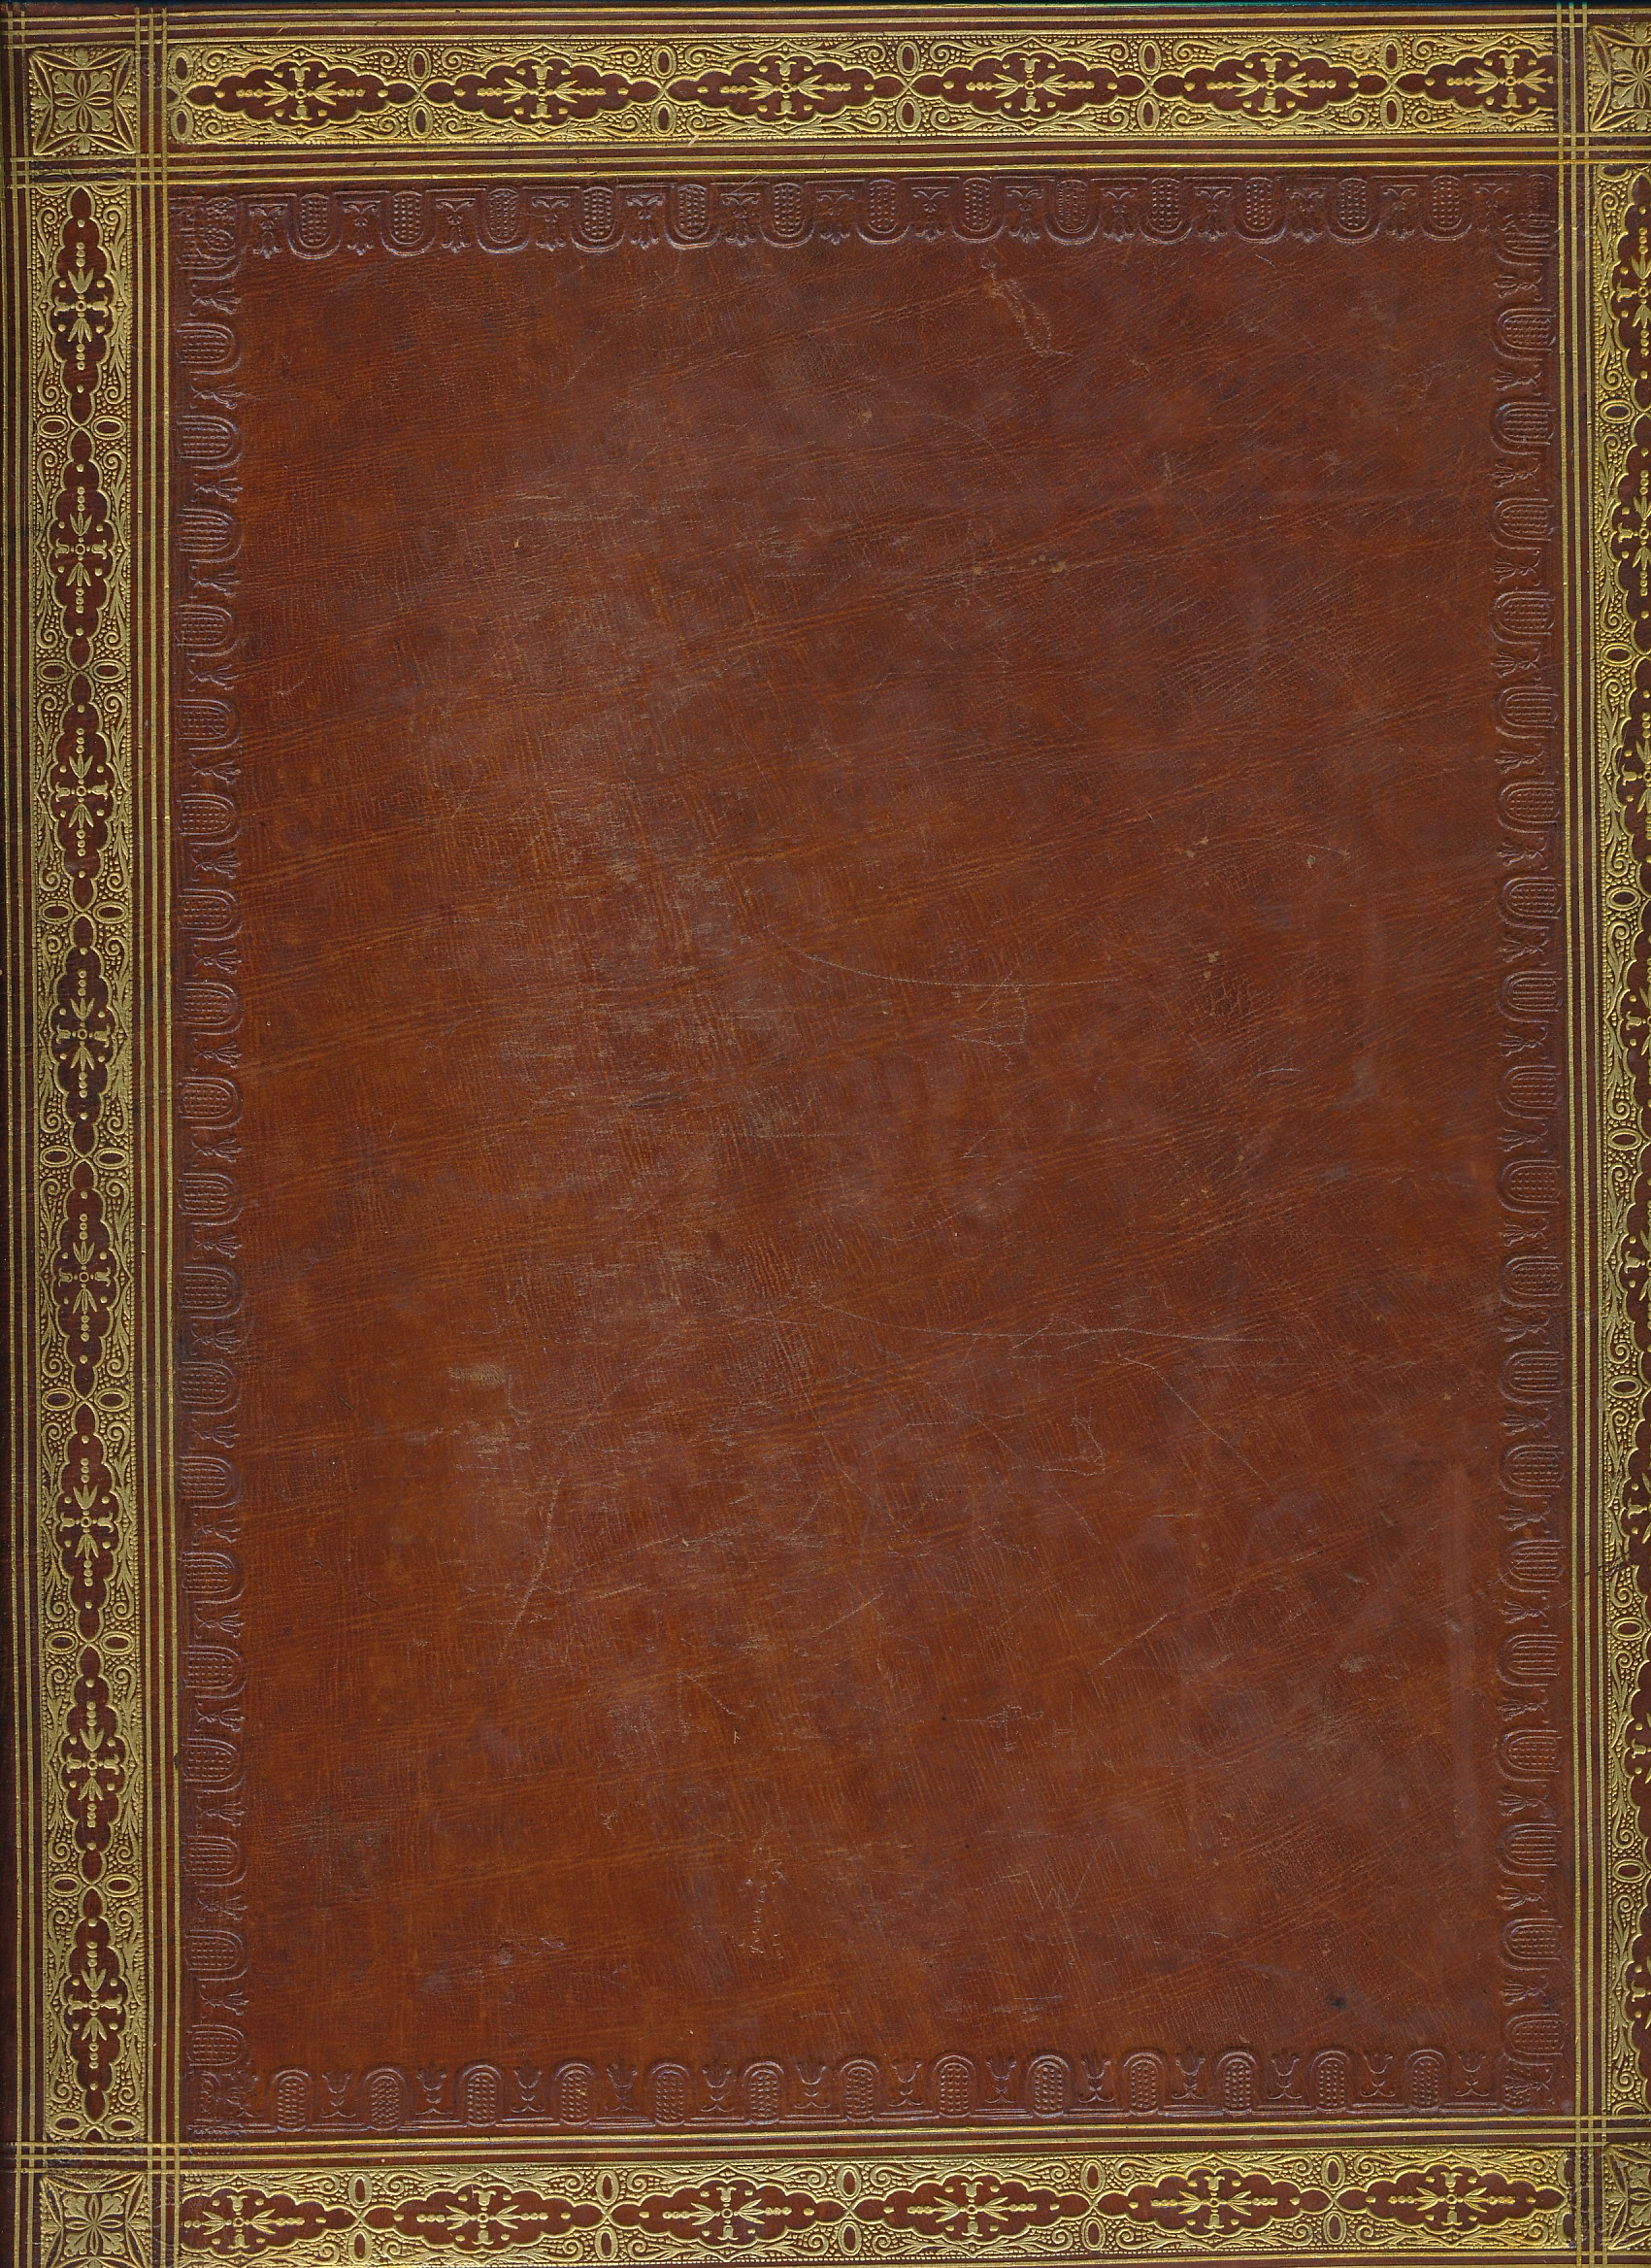 A Tour in Scotland, 1769. A Tour in Scotland and Voyage to the Hebrides 1772.  A Tour in Scotland 1772. 3 volume set.